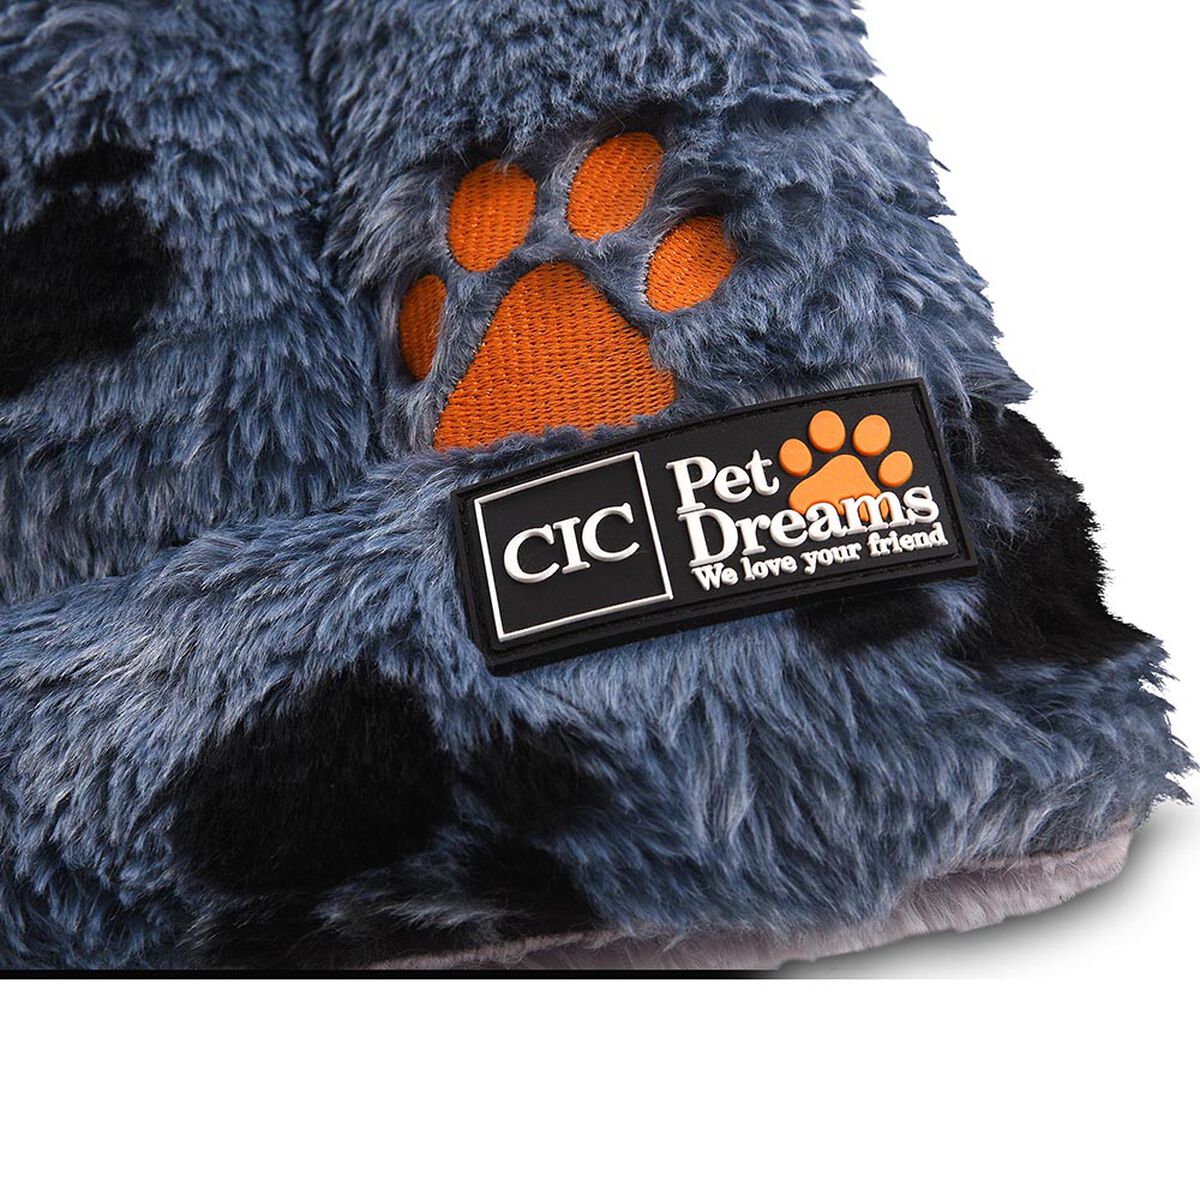 Colchón para Mascota CIC Pet Dreams Talla S